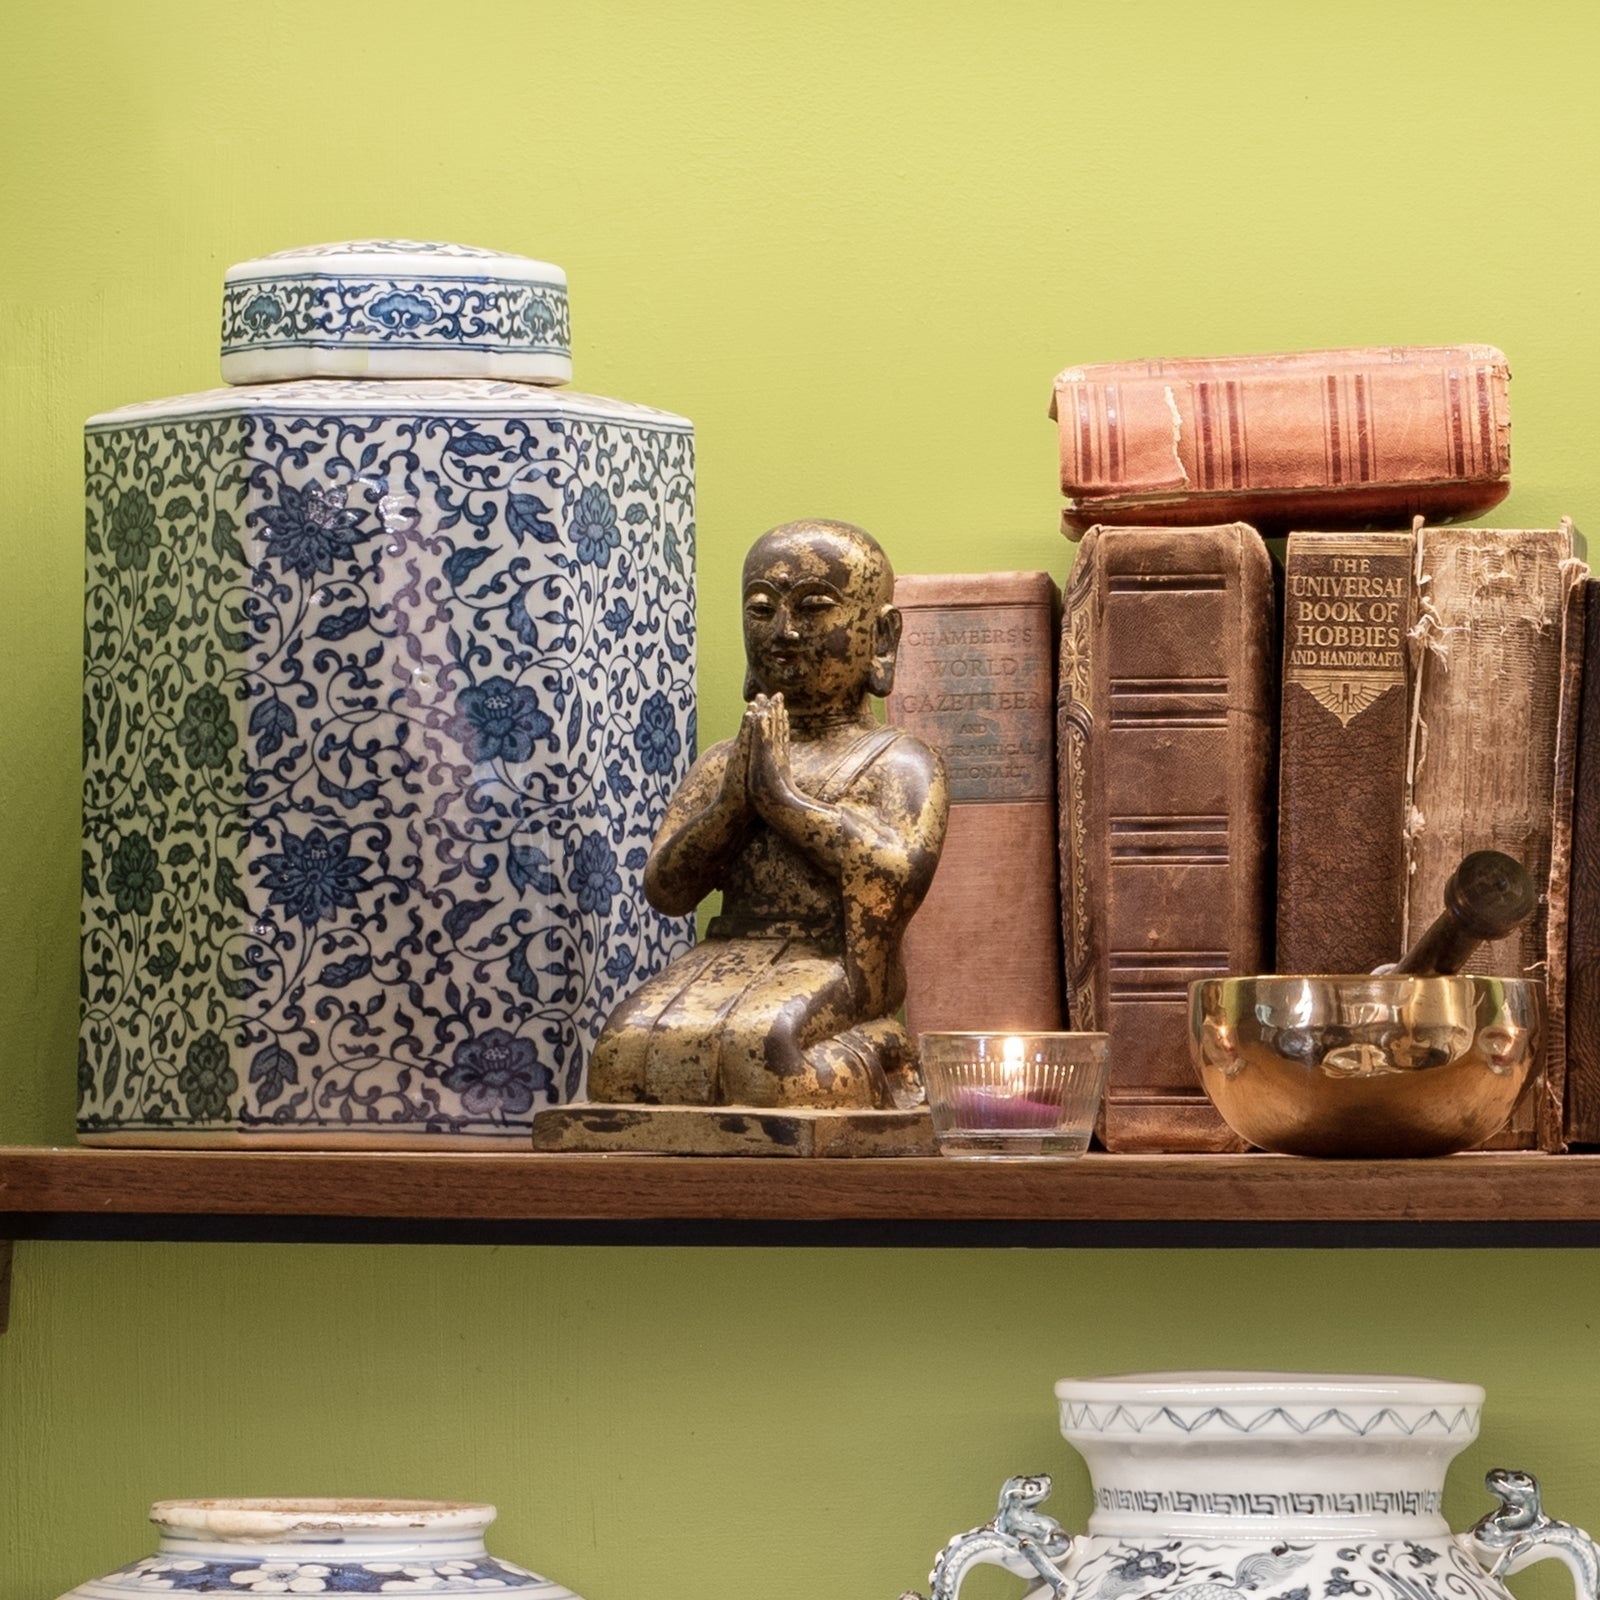 Reproduction Chinese Blue & White Porcelain  Decorative Tea Caddy Ginger Jar | Indigo Antiques